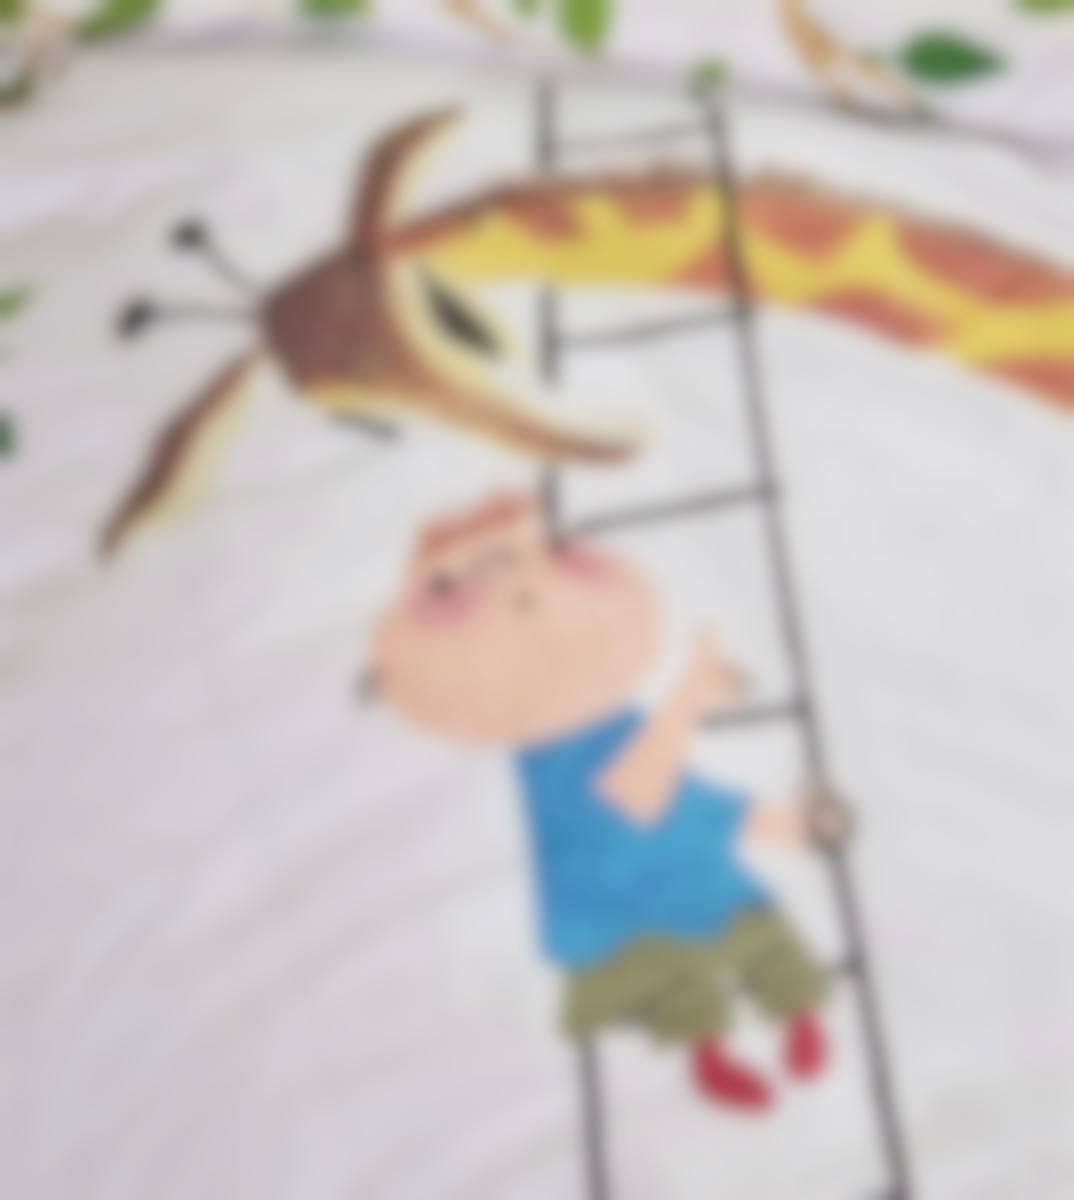 Beddinghouse Kids housse de couette Fiep Giraf Multi Coton